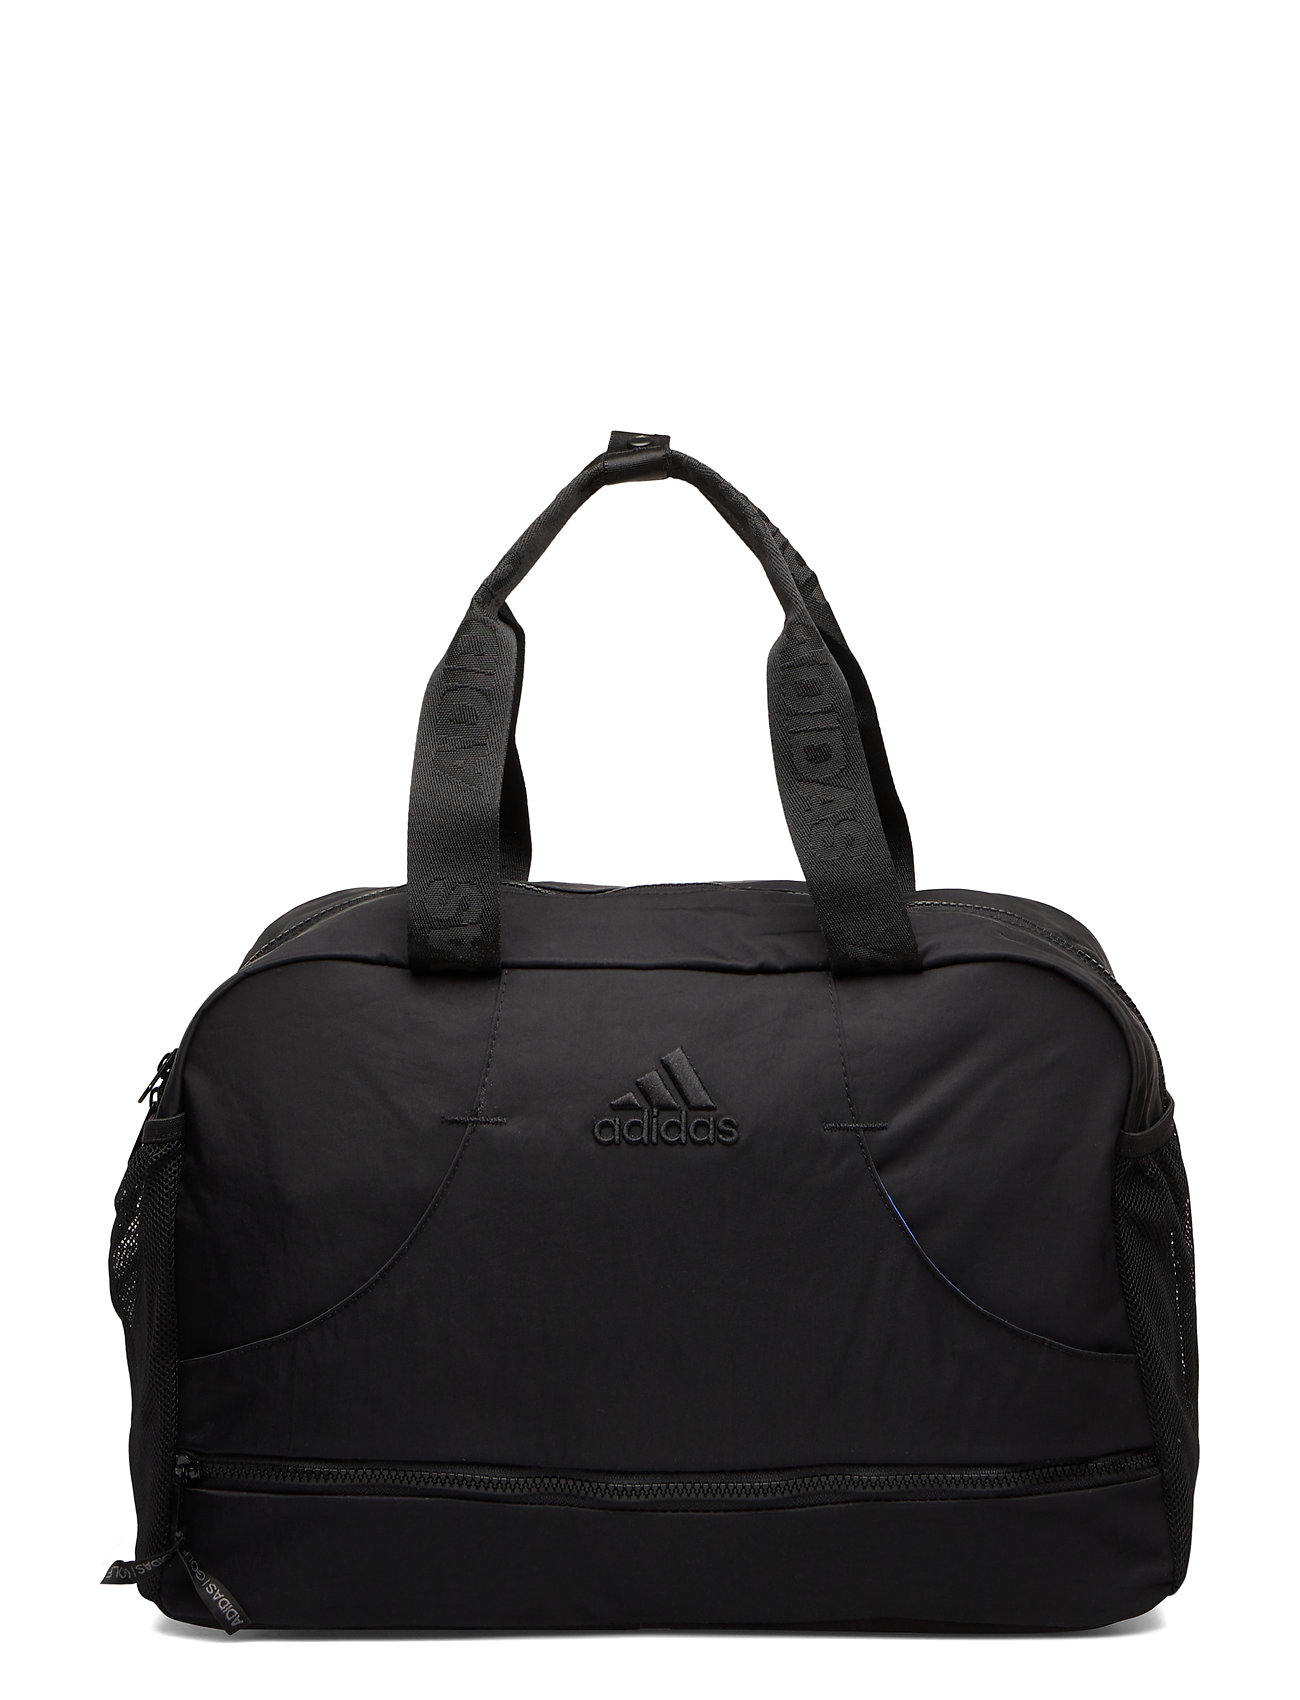 adidas Golf W Tote Bag (Black), (29.98 